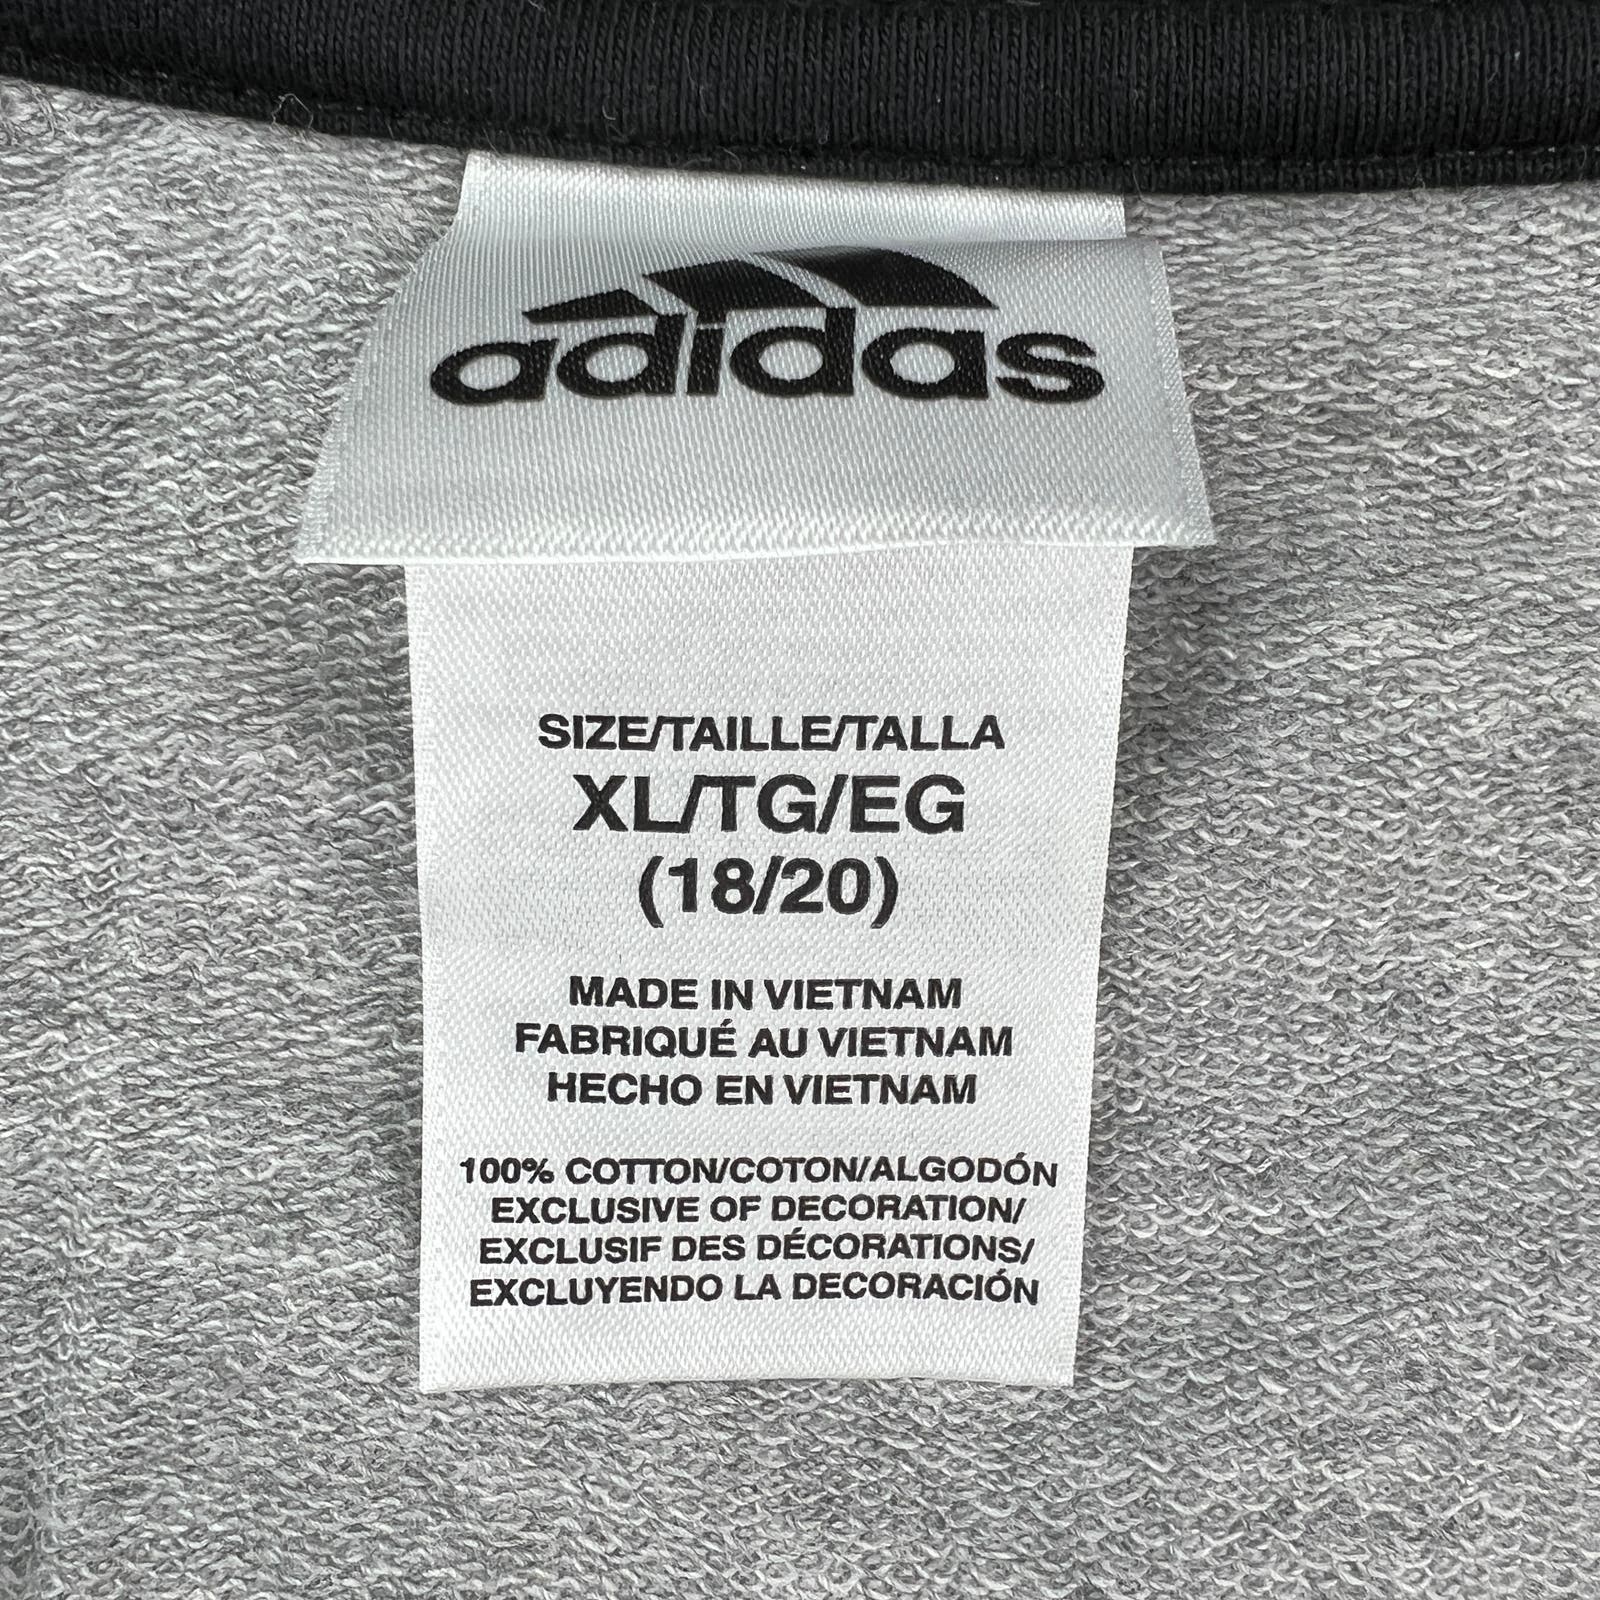 Adidas Black Grey Sporty Cotton Jacket US XL Transitional  Full Zip